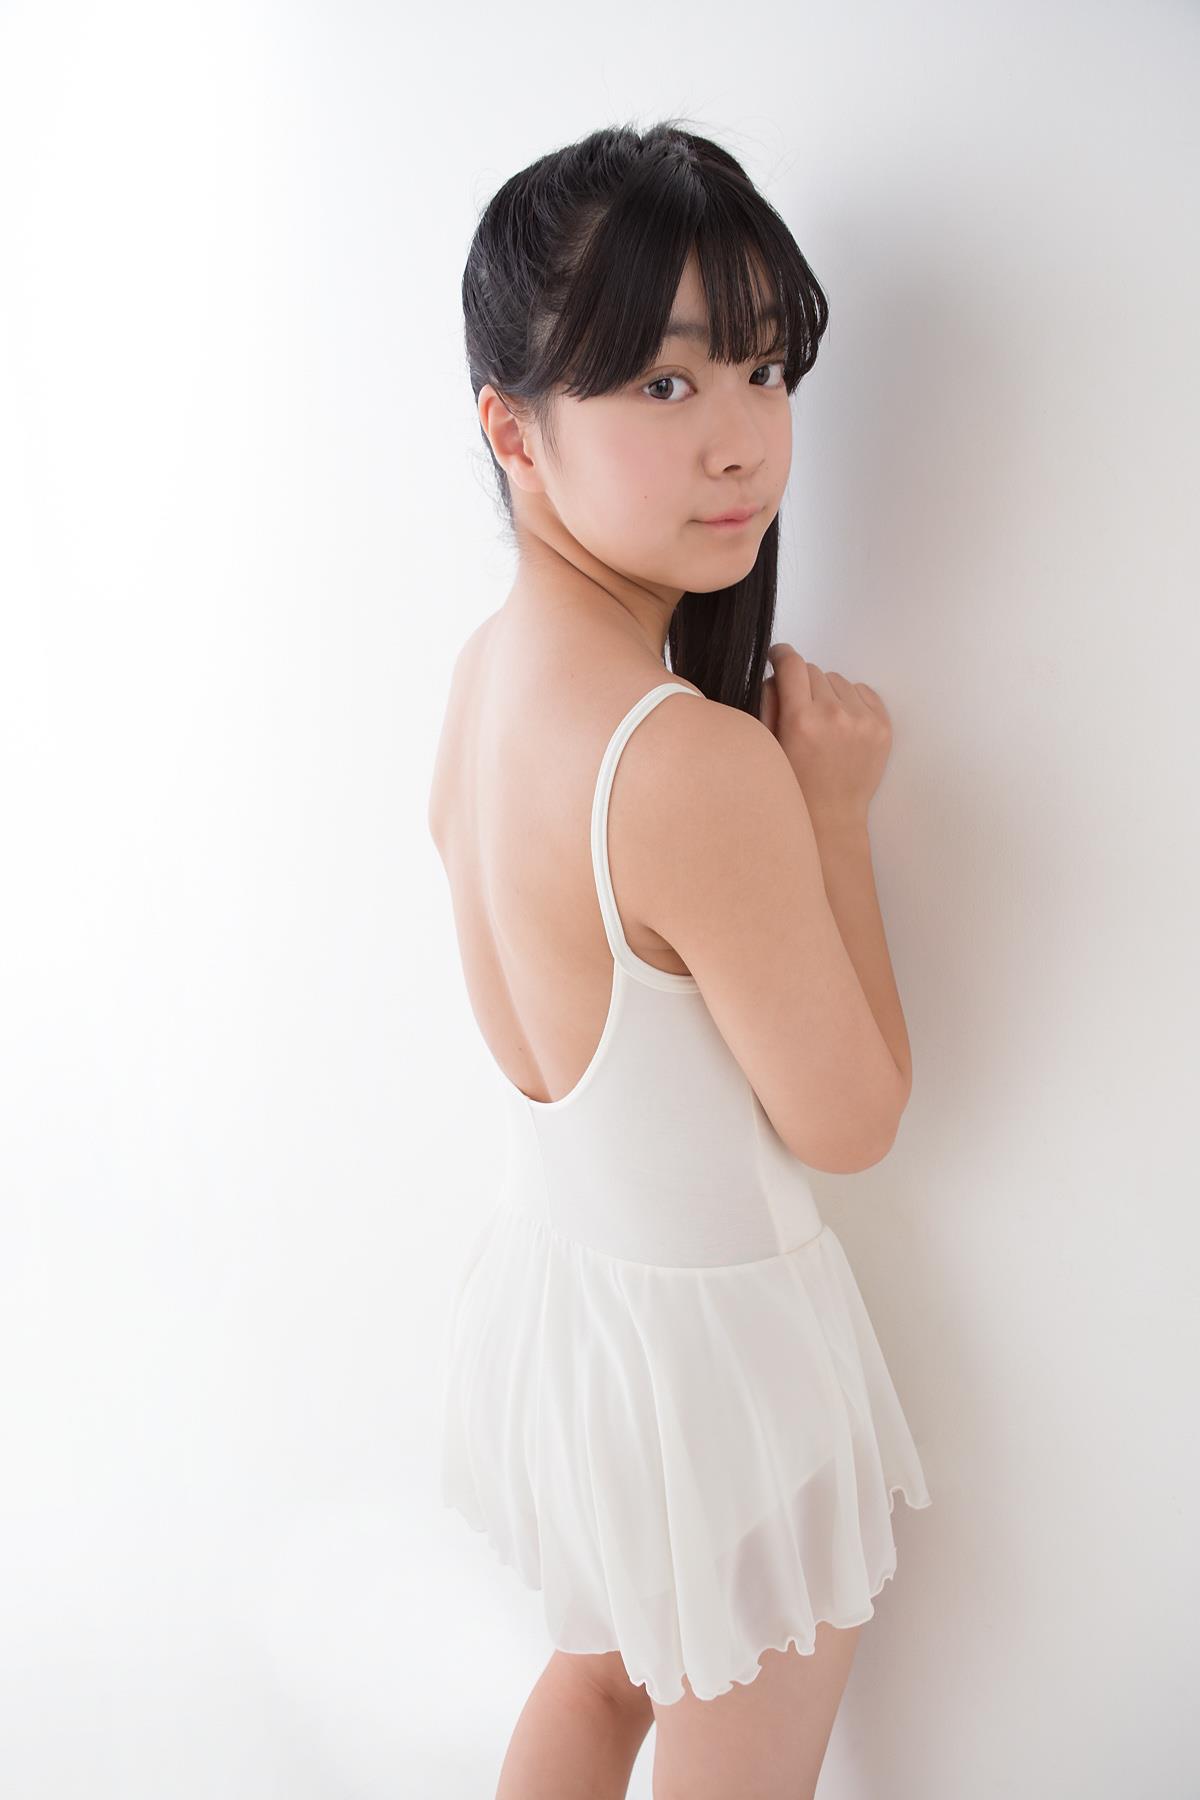 Minisuka.tv Saria Natsume 夏目咲莉愛 - Premium Gallery 2.2 - 41.jpg